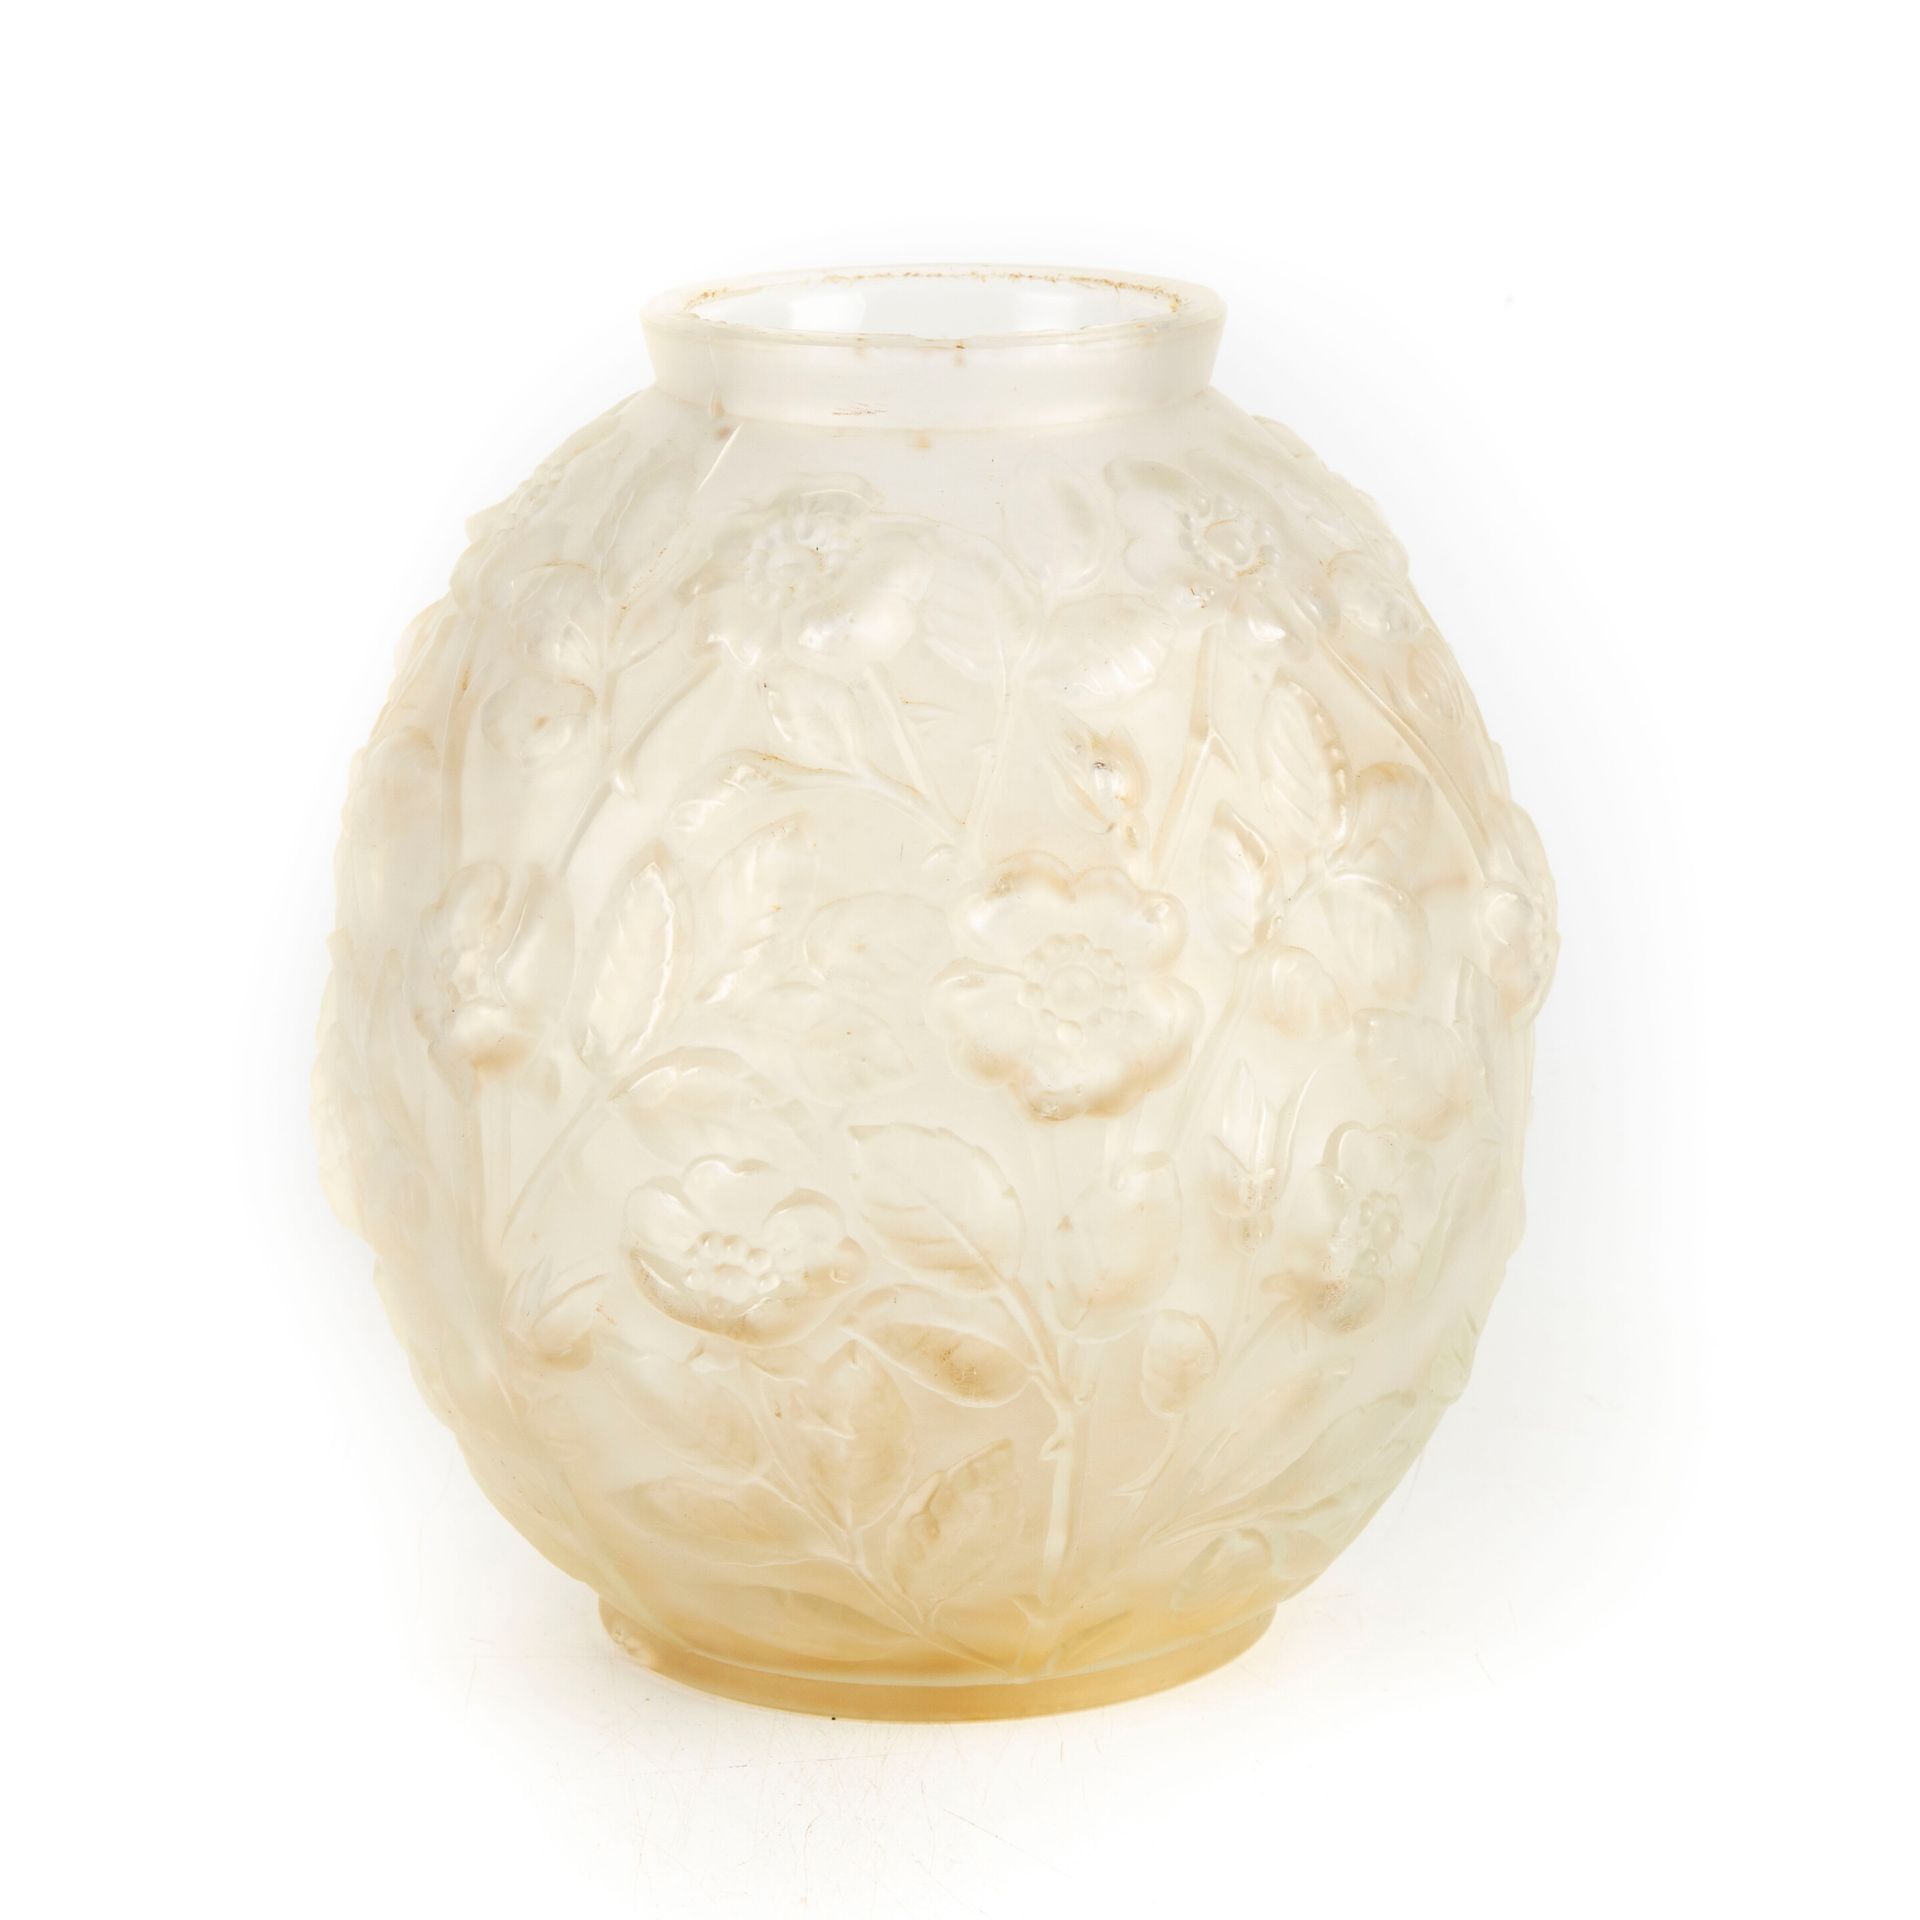 Null 乳白色的玻璃球花瓶，有花的设计。

H.21厘米

小碎片和头发